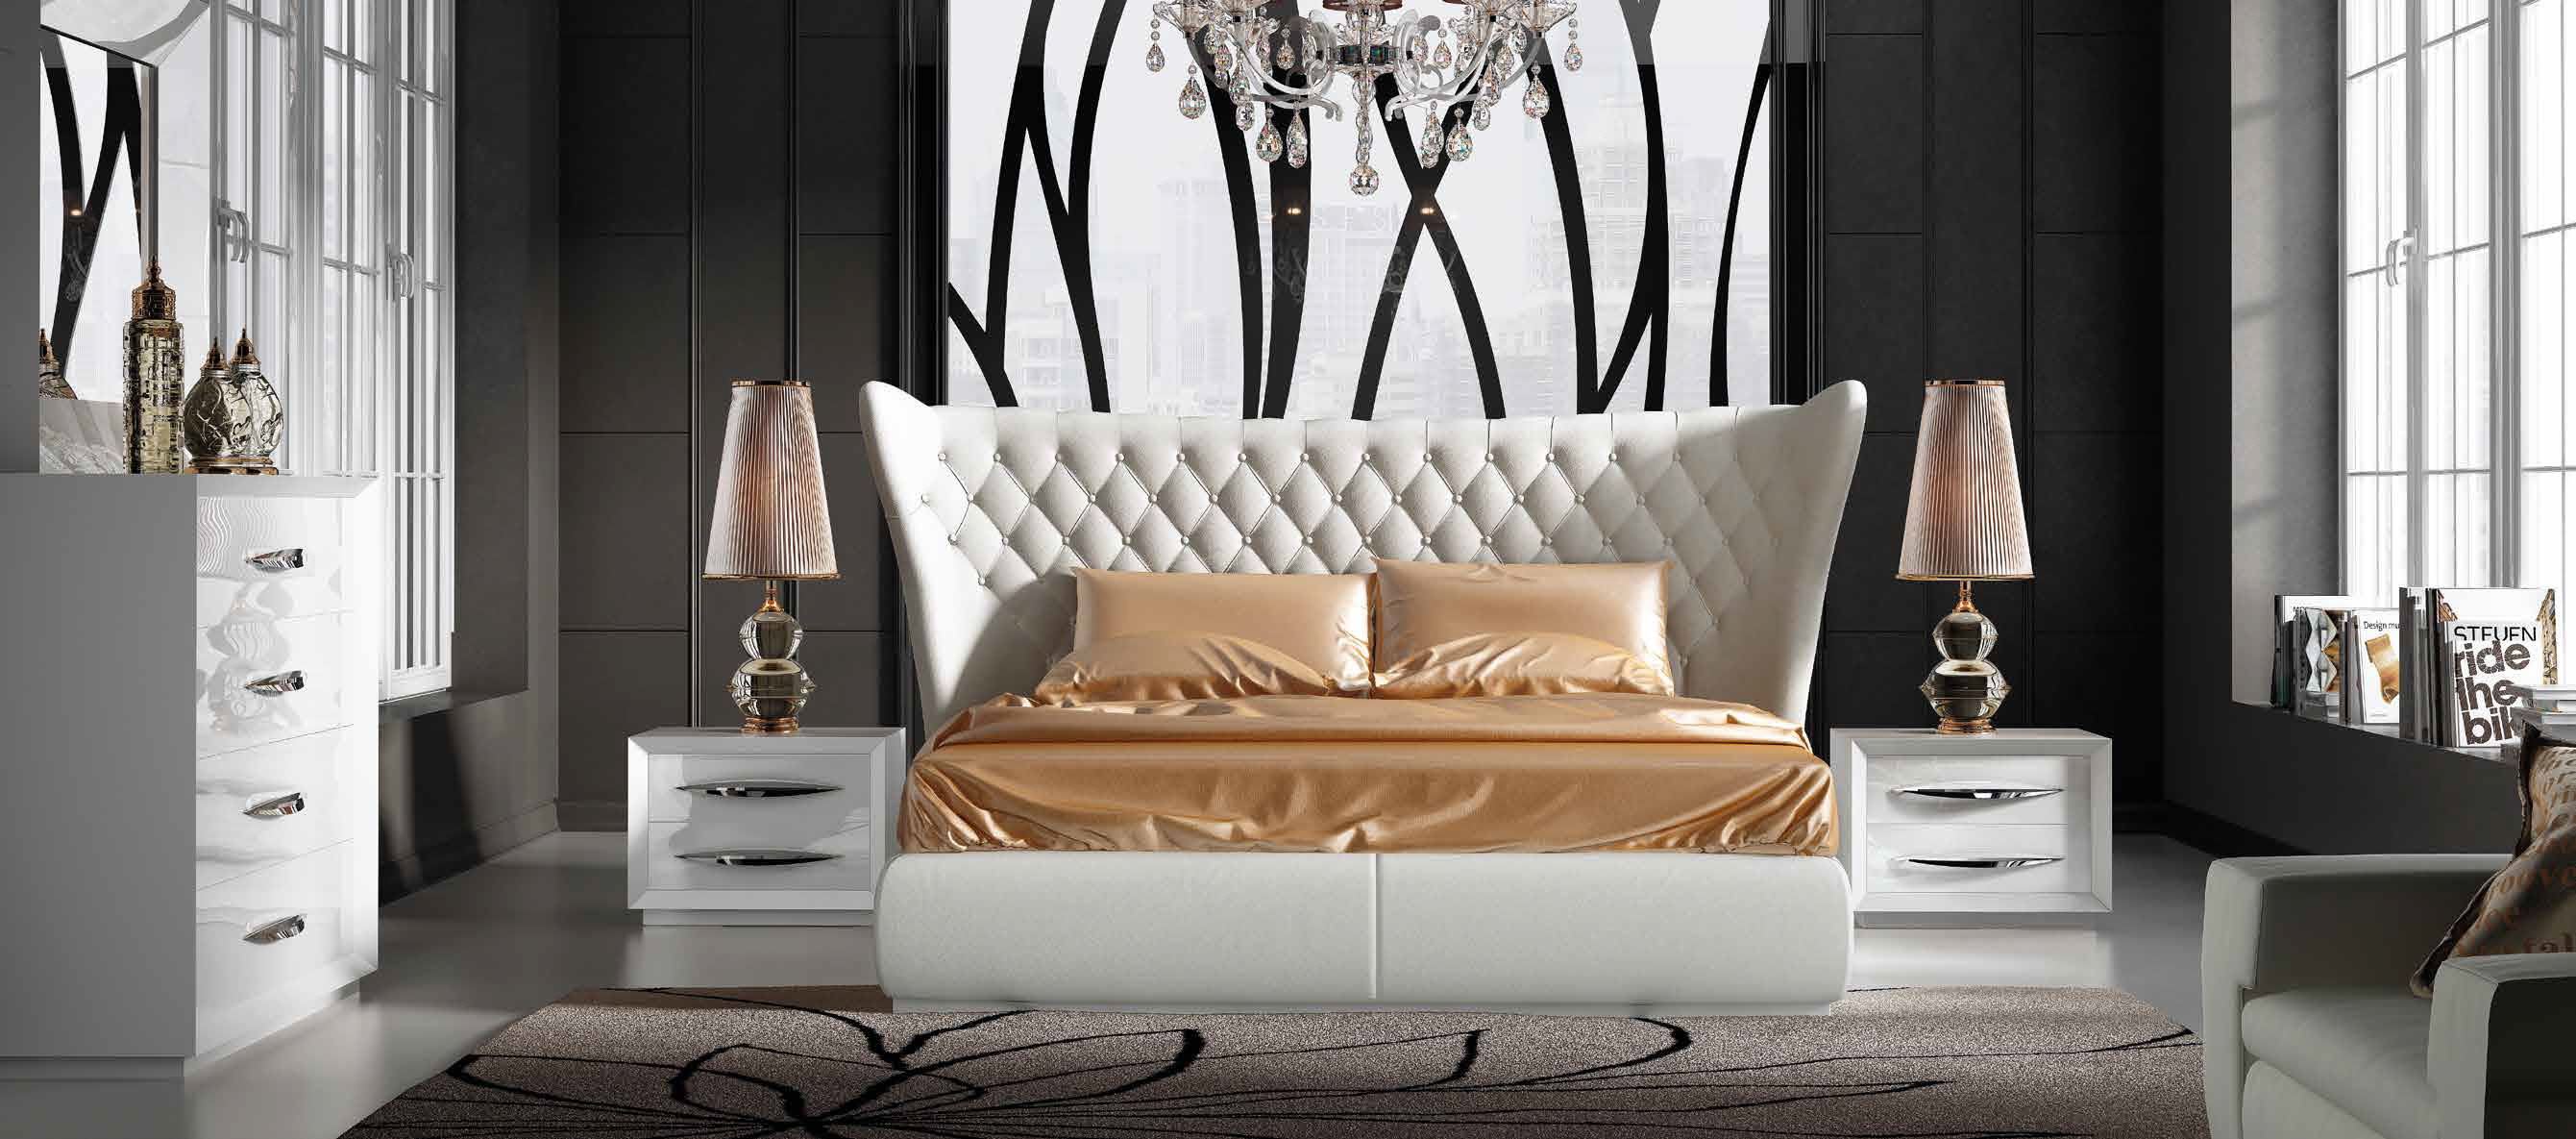 Brands Franco Furniture Bedrooms vol2, Spain DOR 74